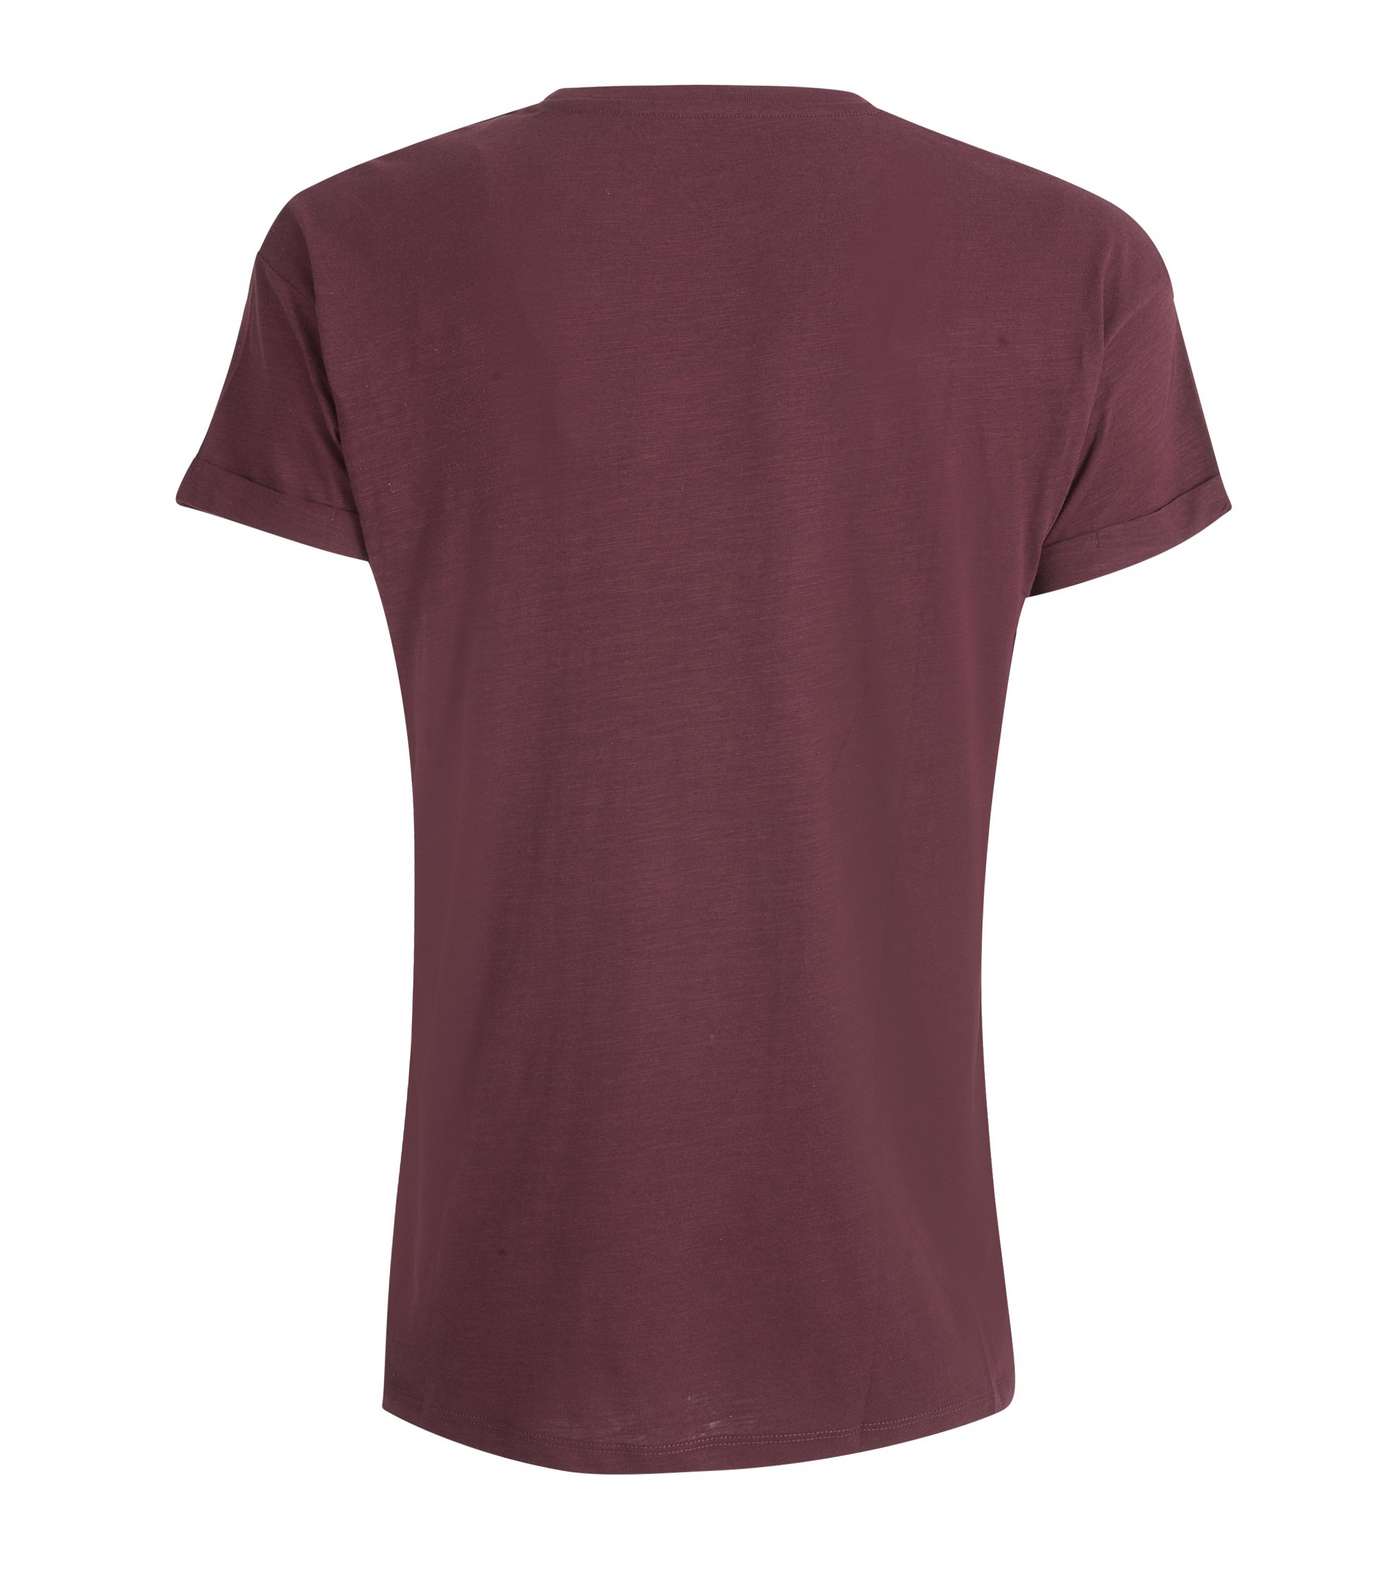 Burgundy Slub Roll Sleeve T-Shirt Image 2